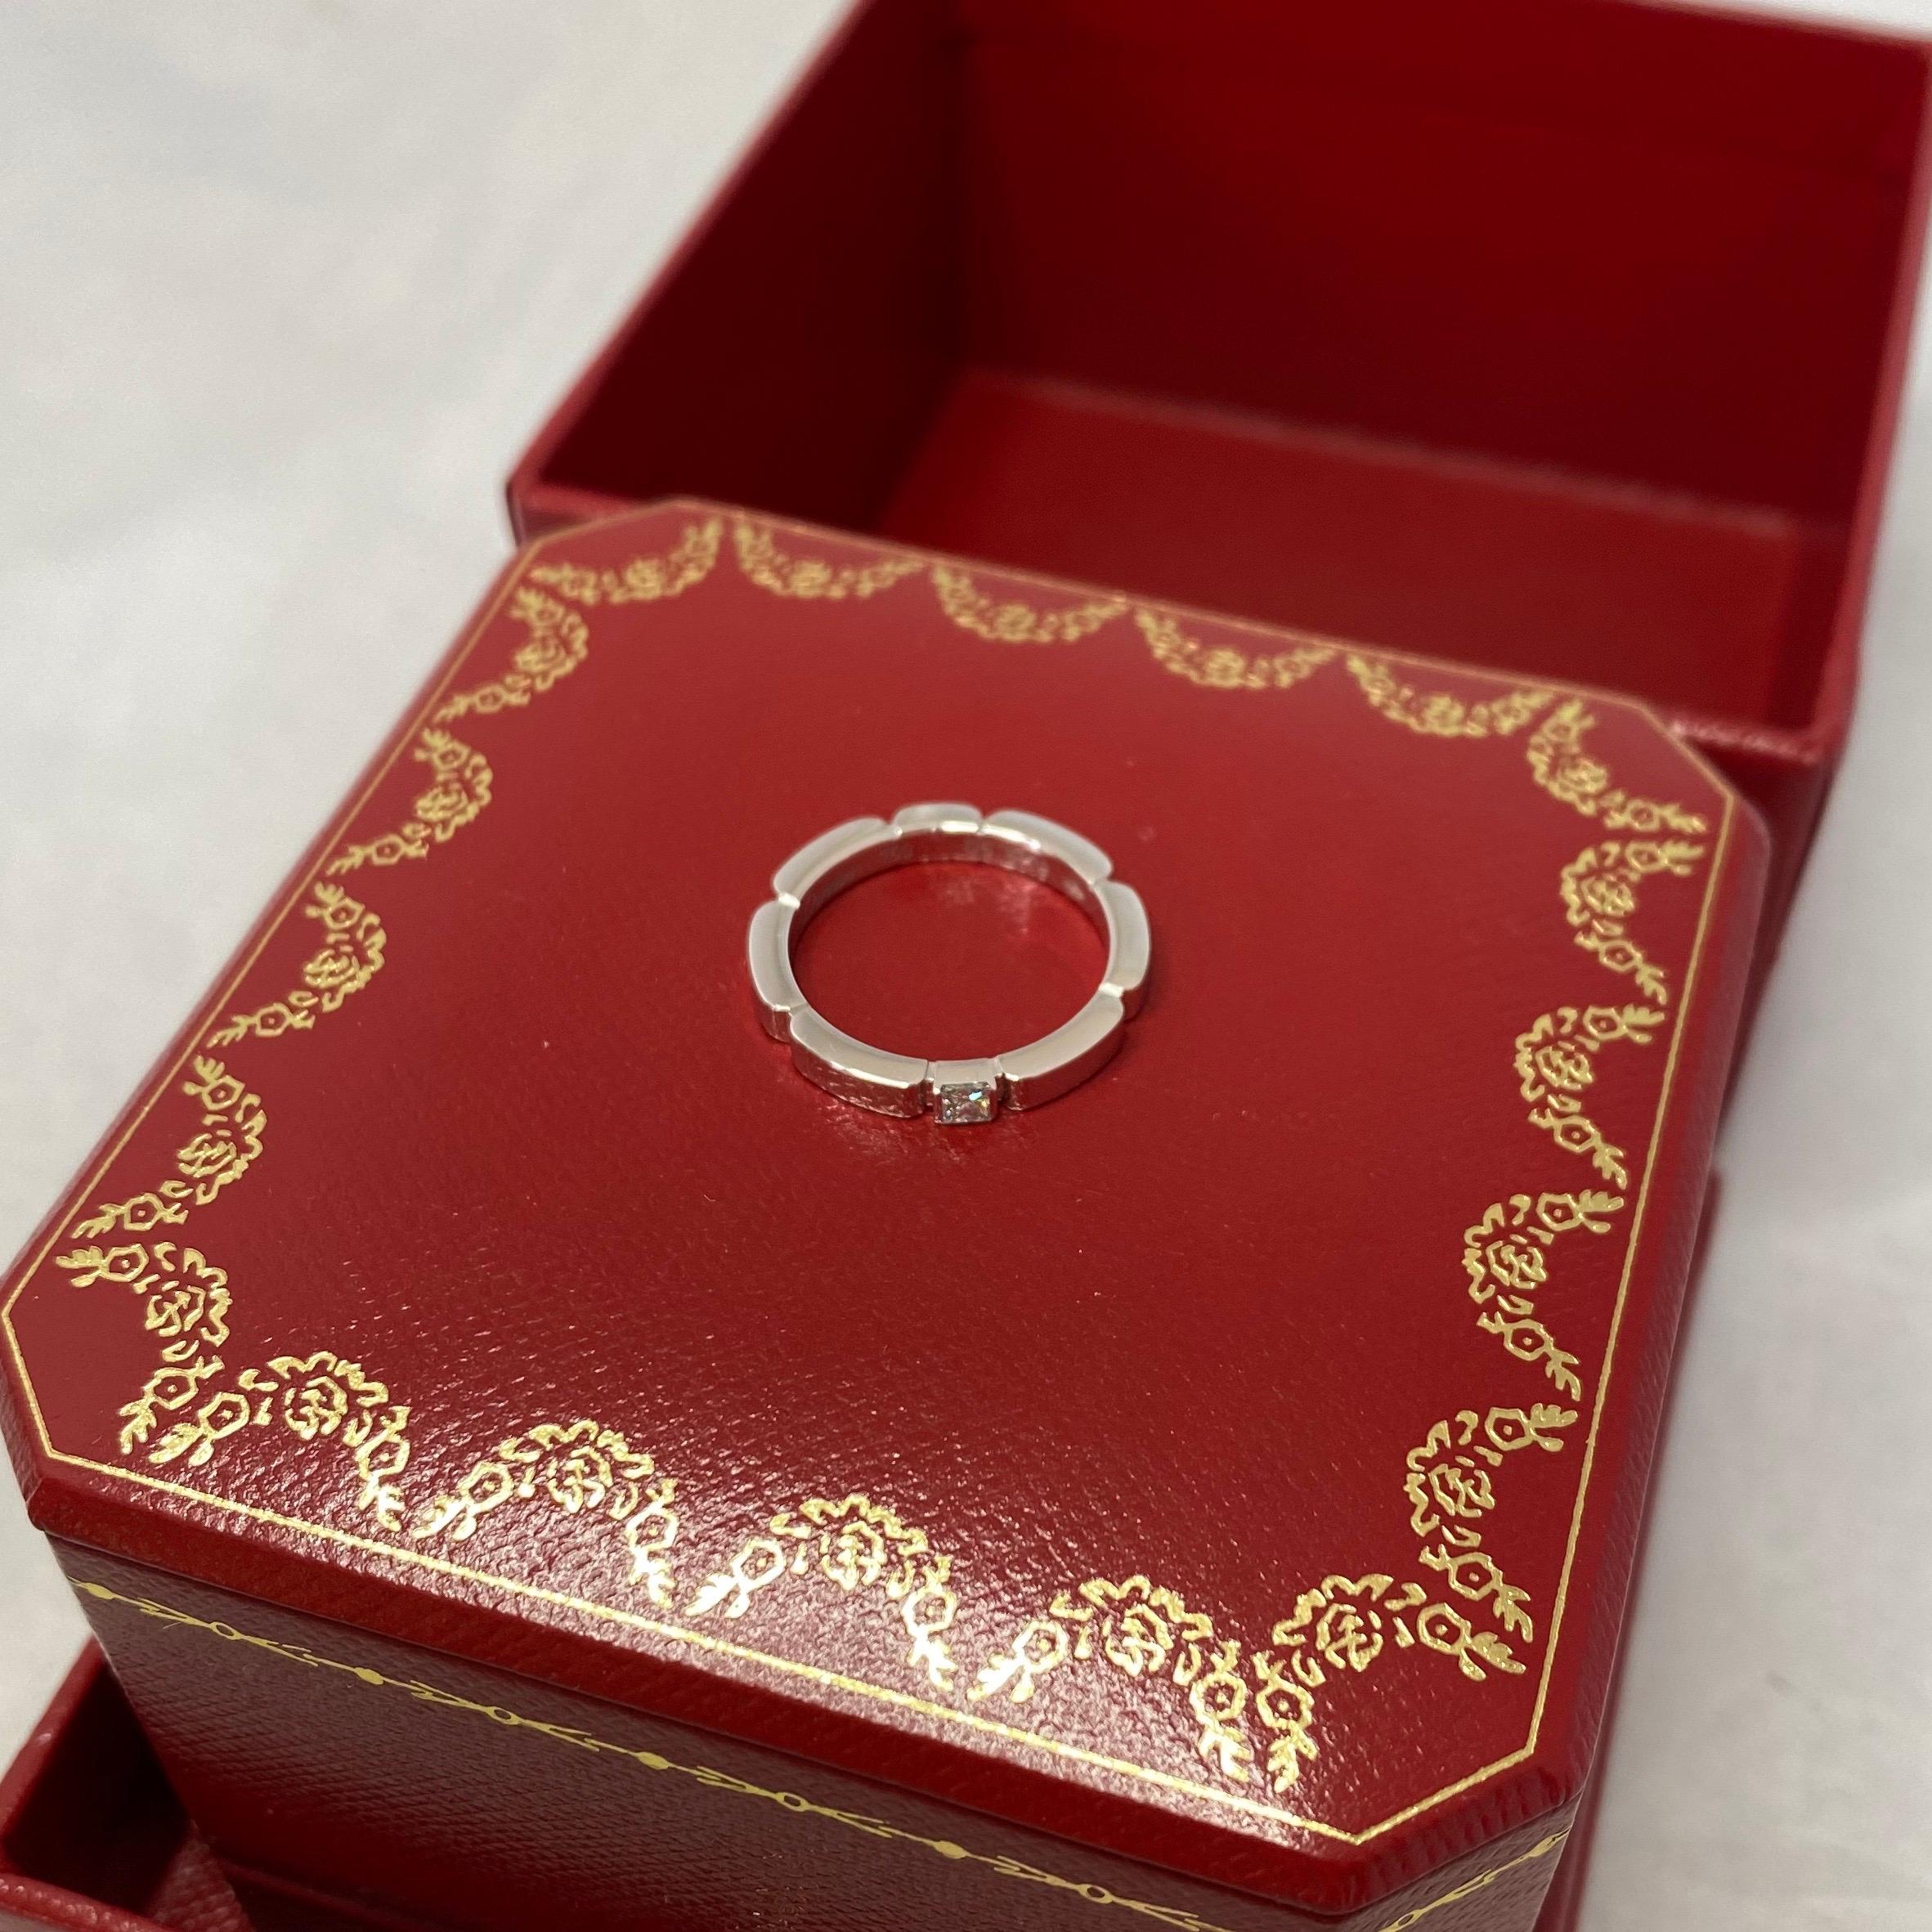 Cartier Maillon Panthere Princess Cut Diamond 18 Karat White Gold Band Ring 49  For Sale 6